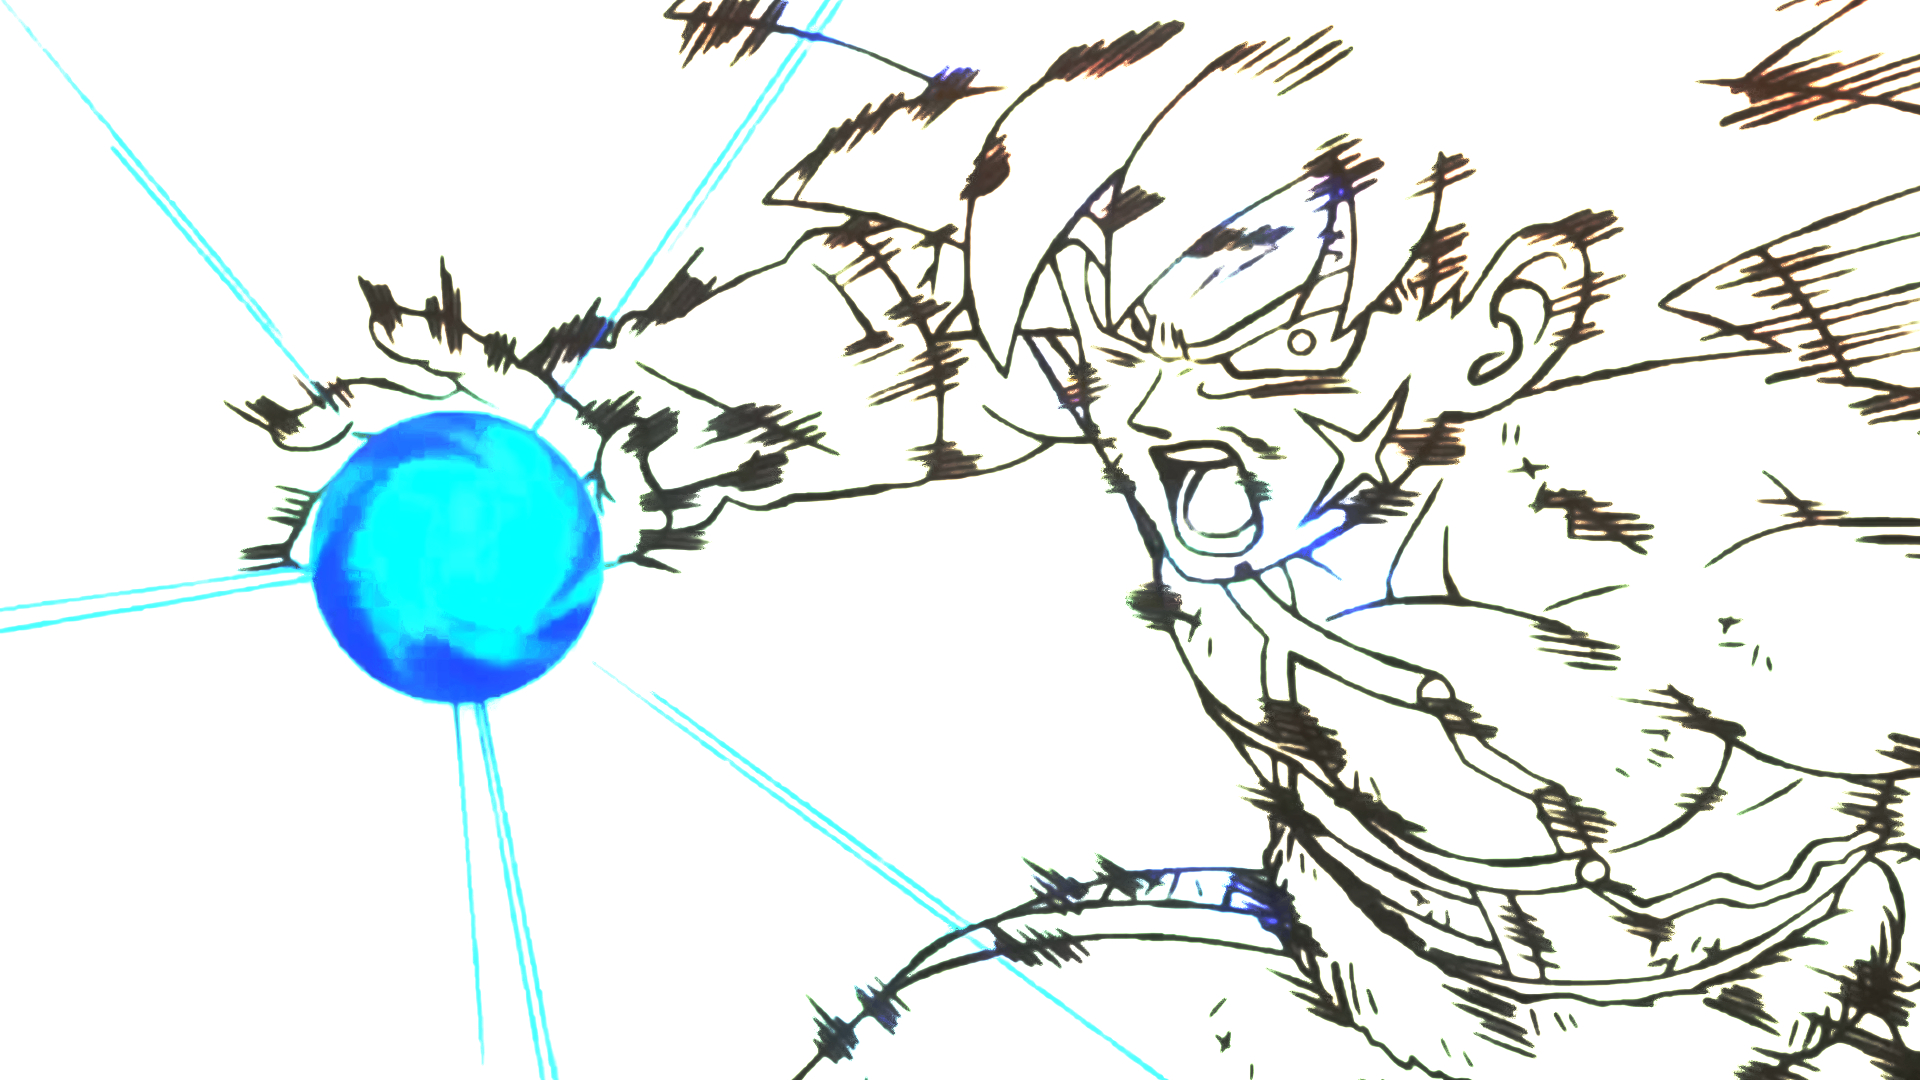 Anime Dragon Ball Super: Broly HD Wallpaper | Background Image